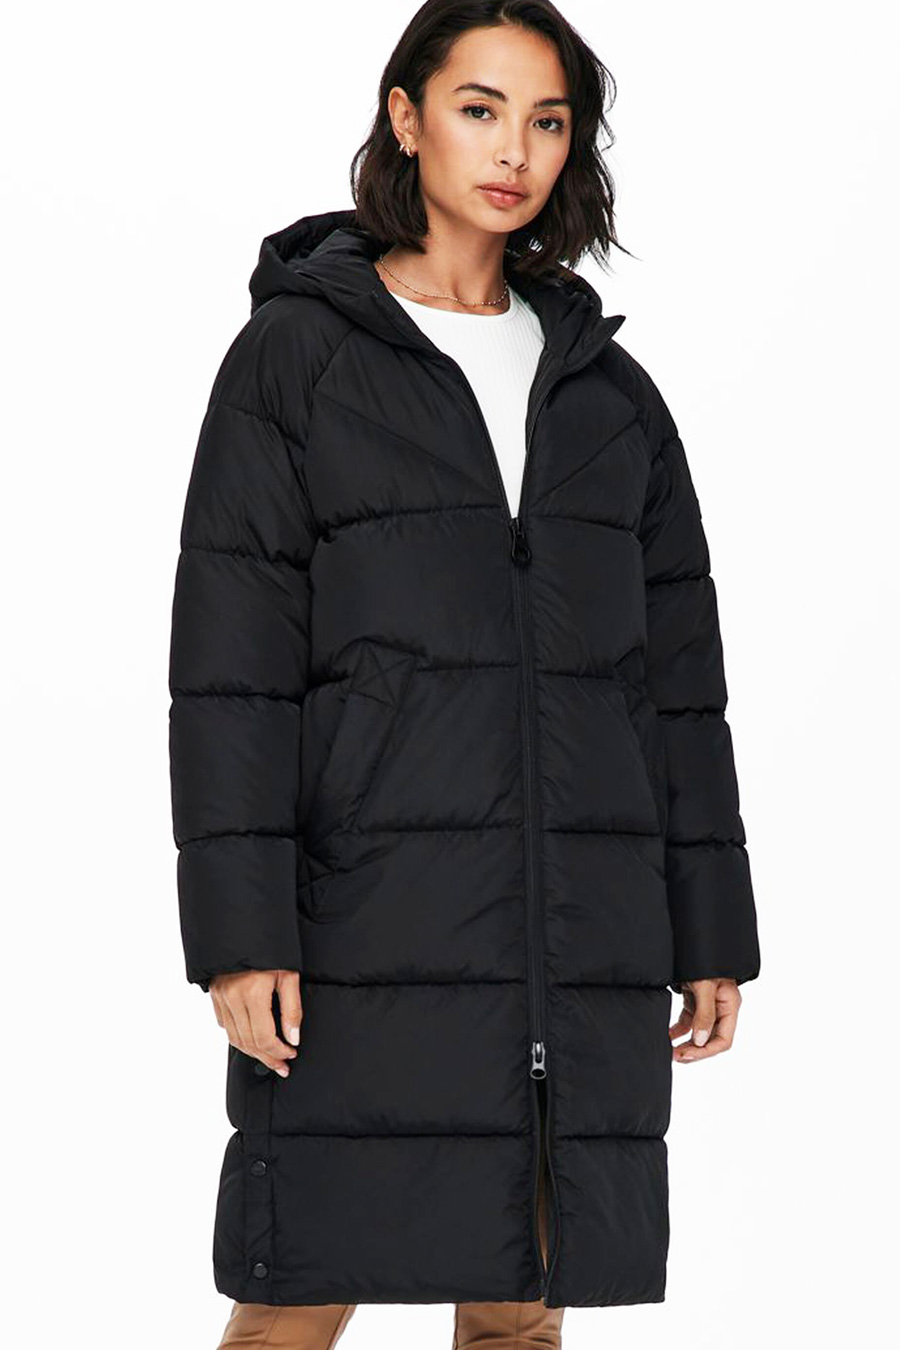 Winter jacket ONLY 15233425-Black